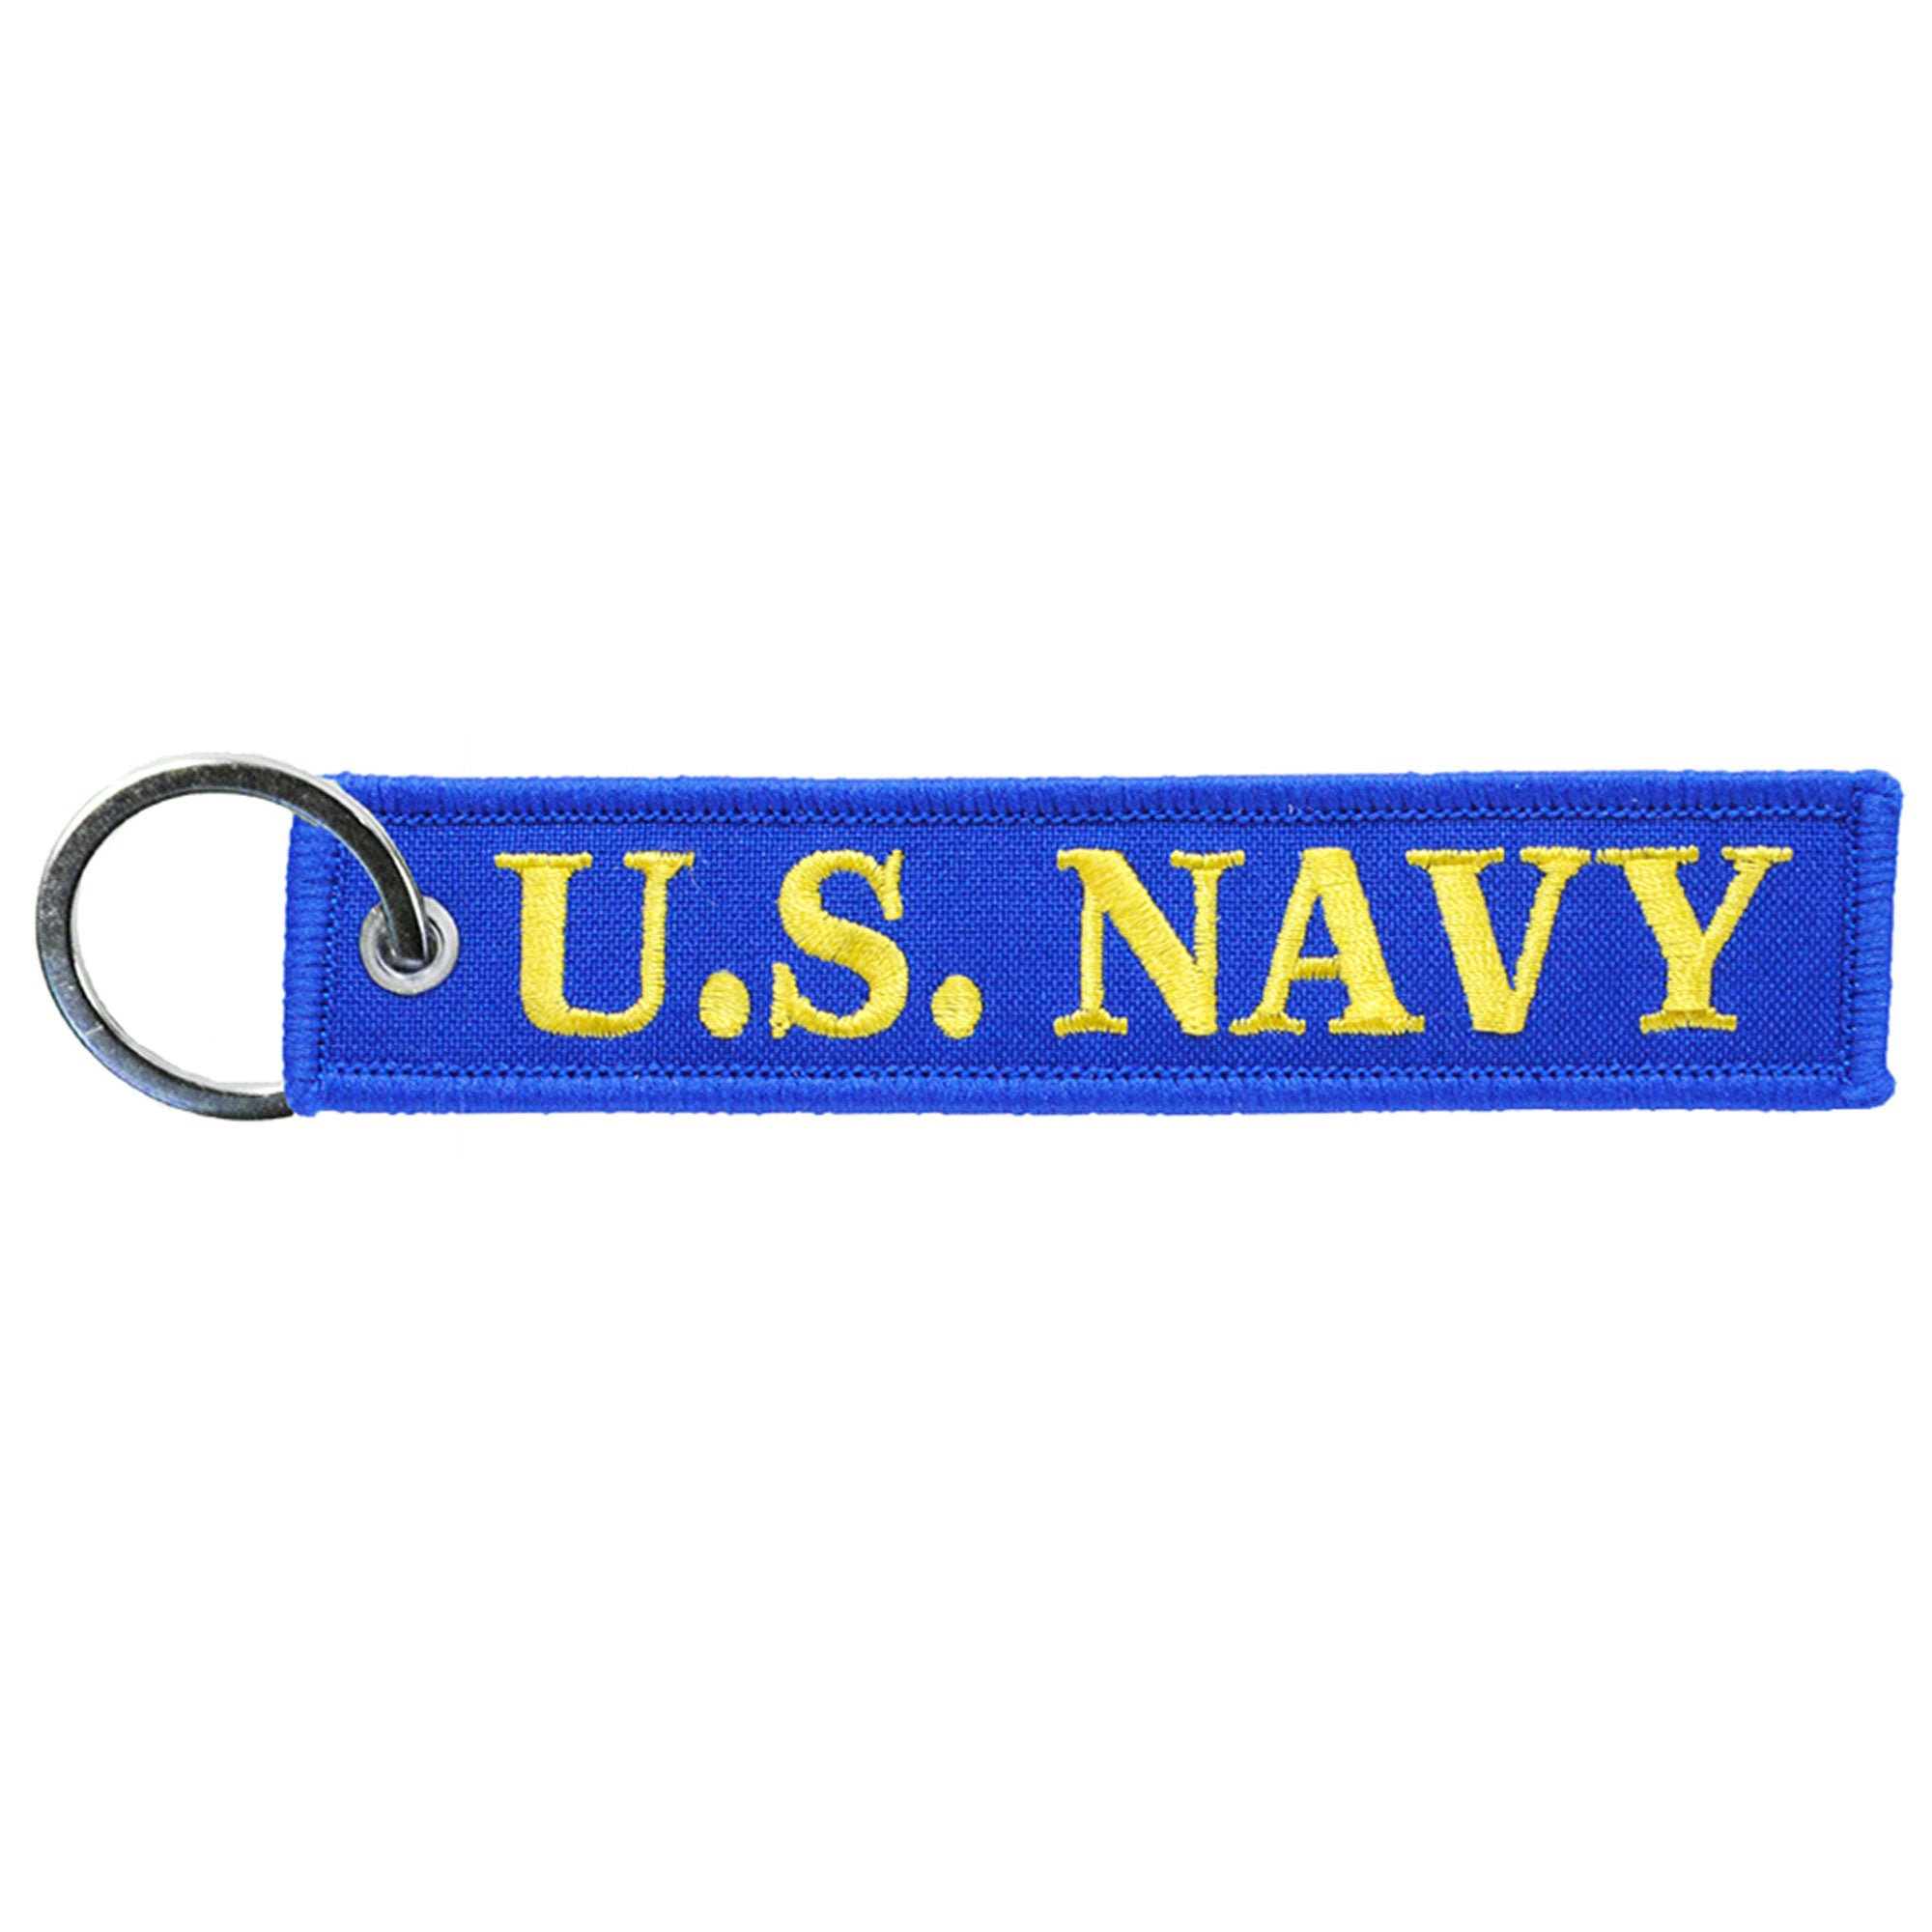 Hot Leathers U.S. Navy America's Navy Key Chain Fob